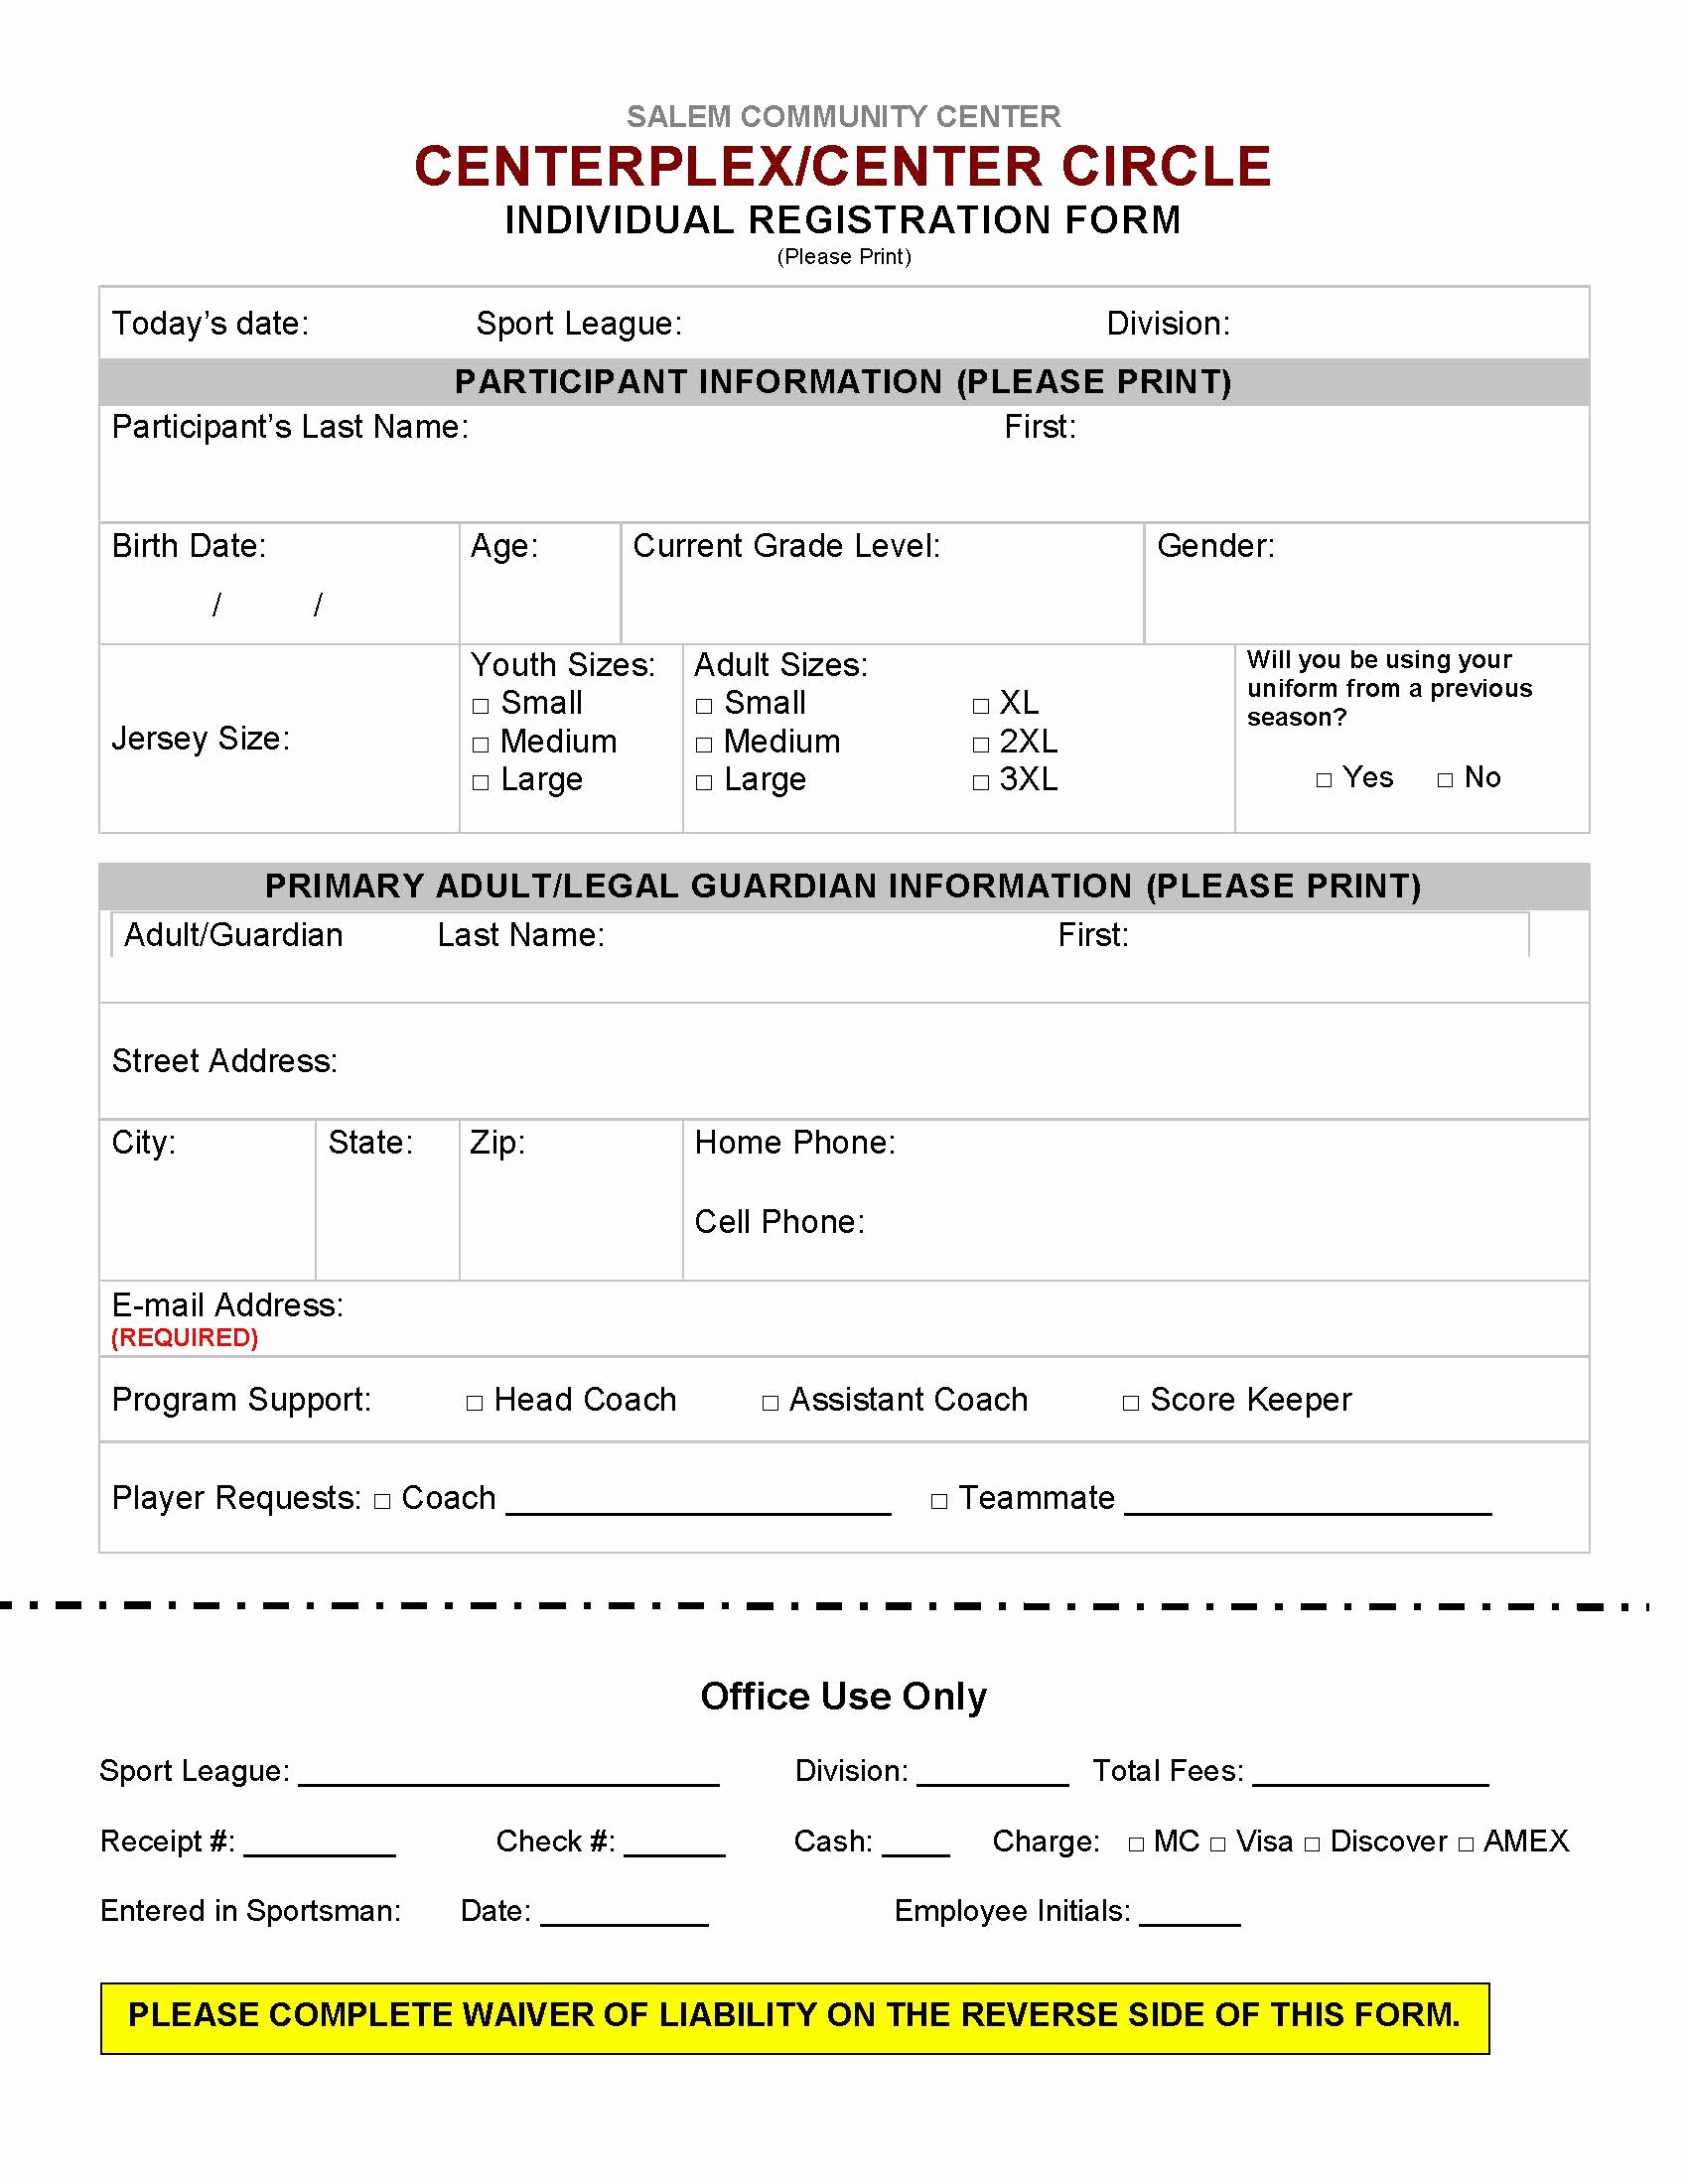 Sports Registration form Template Unique Salem Munity Center Individual Sports Registration